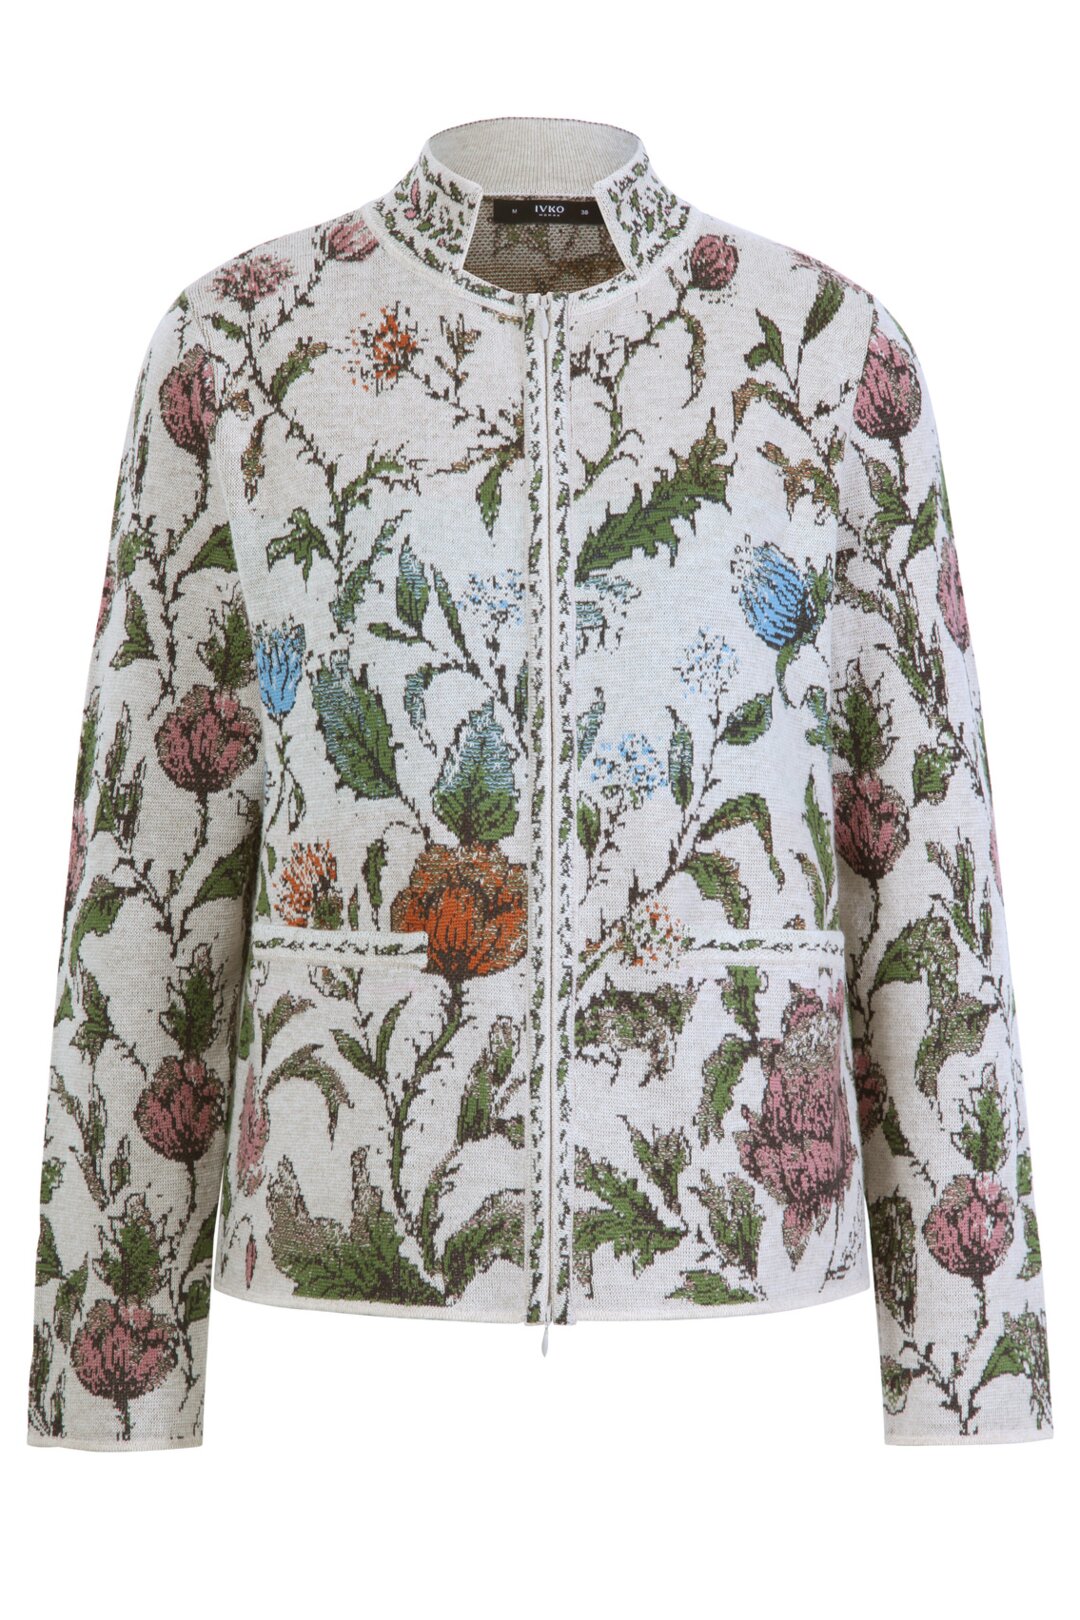 Jacquard Jacket, Floral Pattern